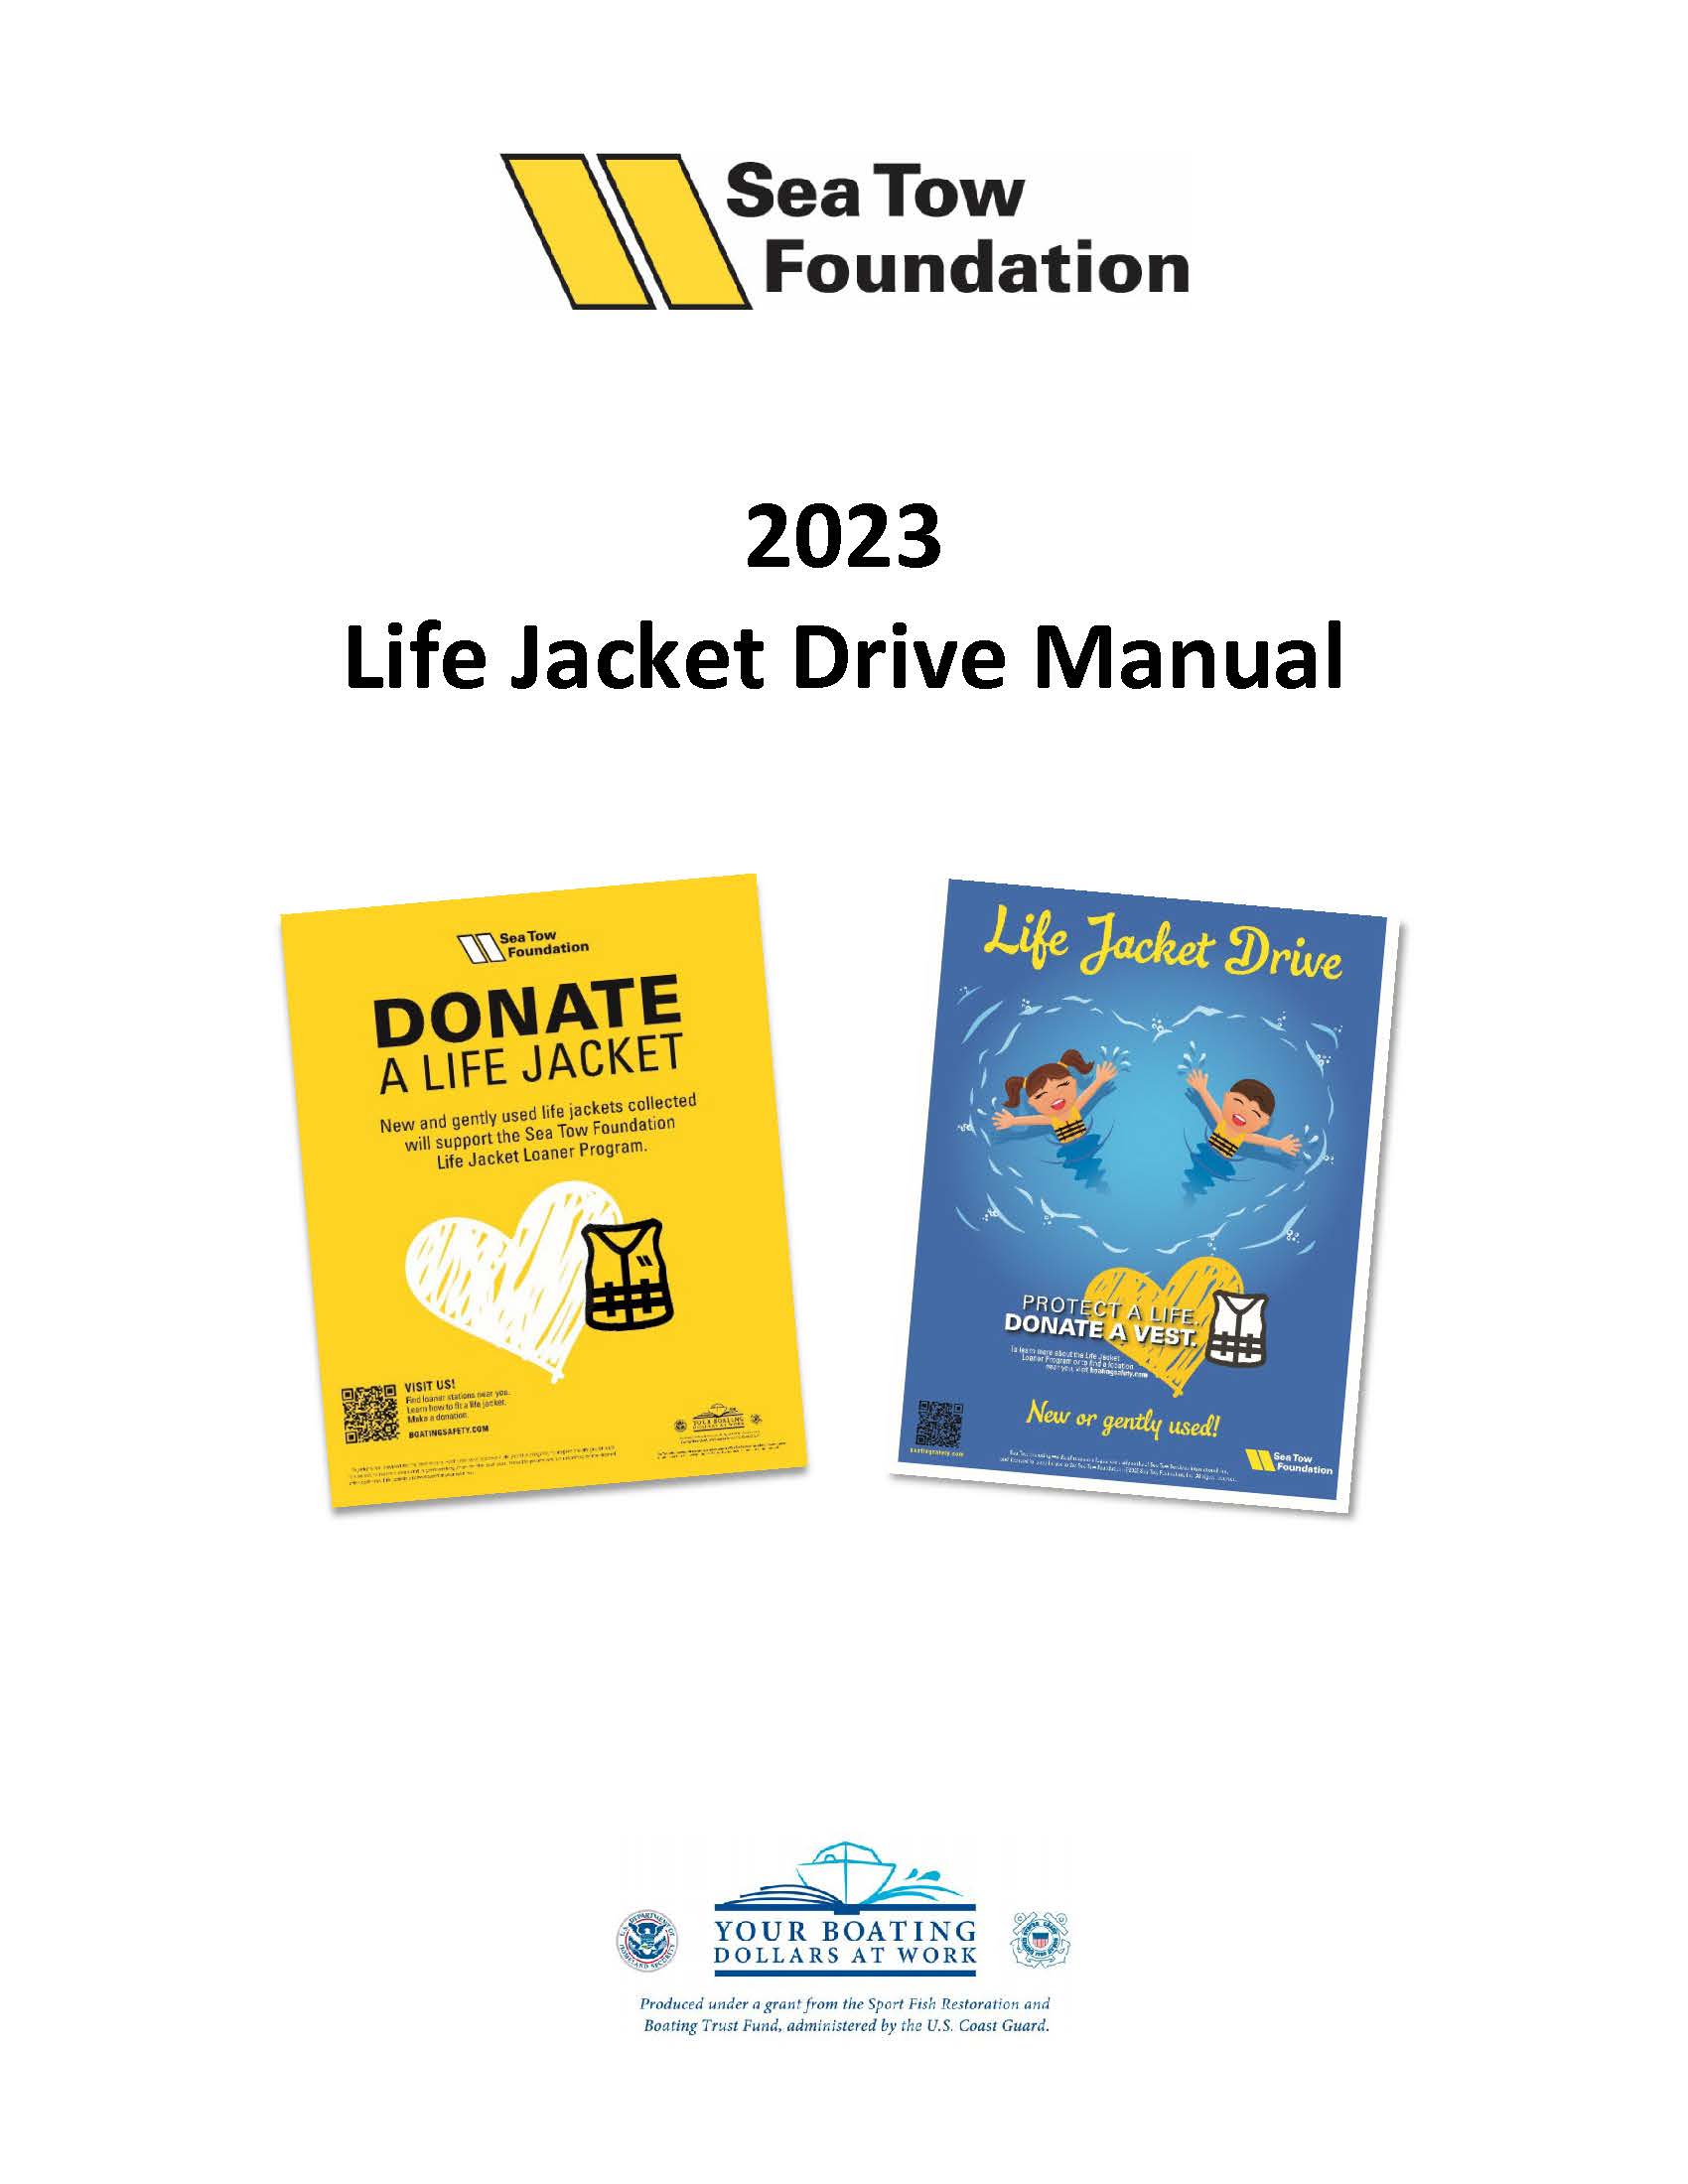 Life Jacket Drive - Sea Tow Foundation